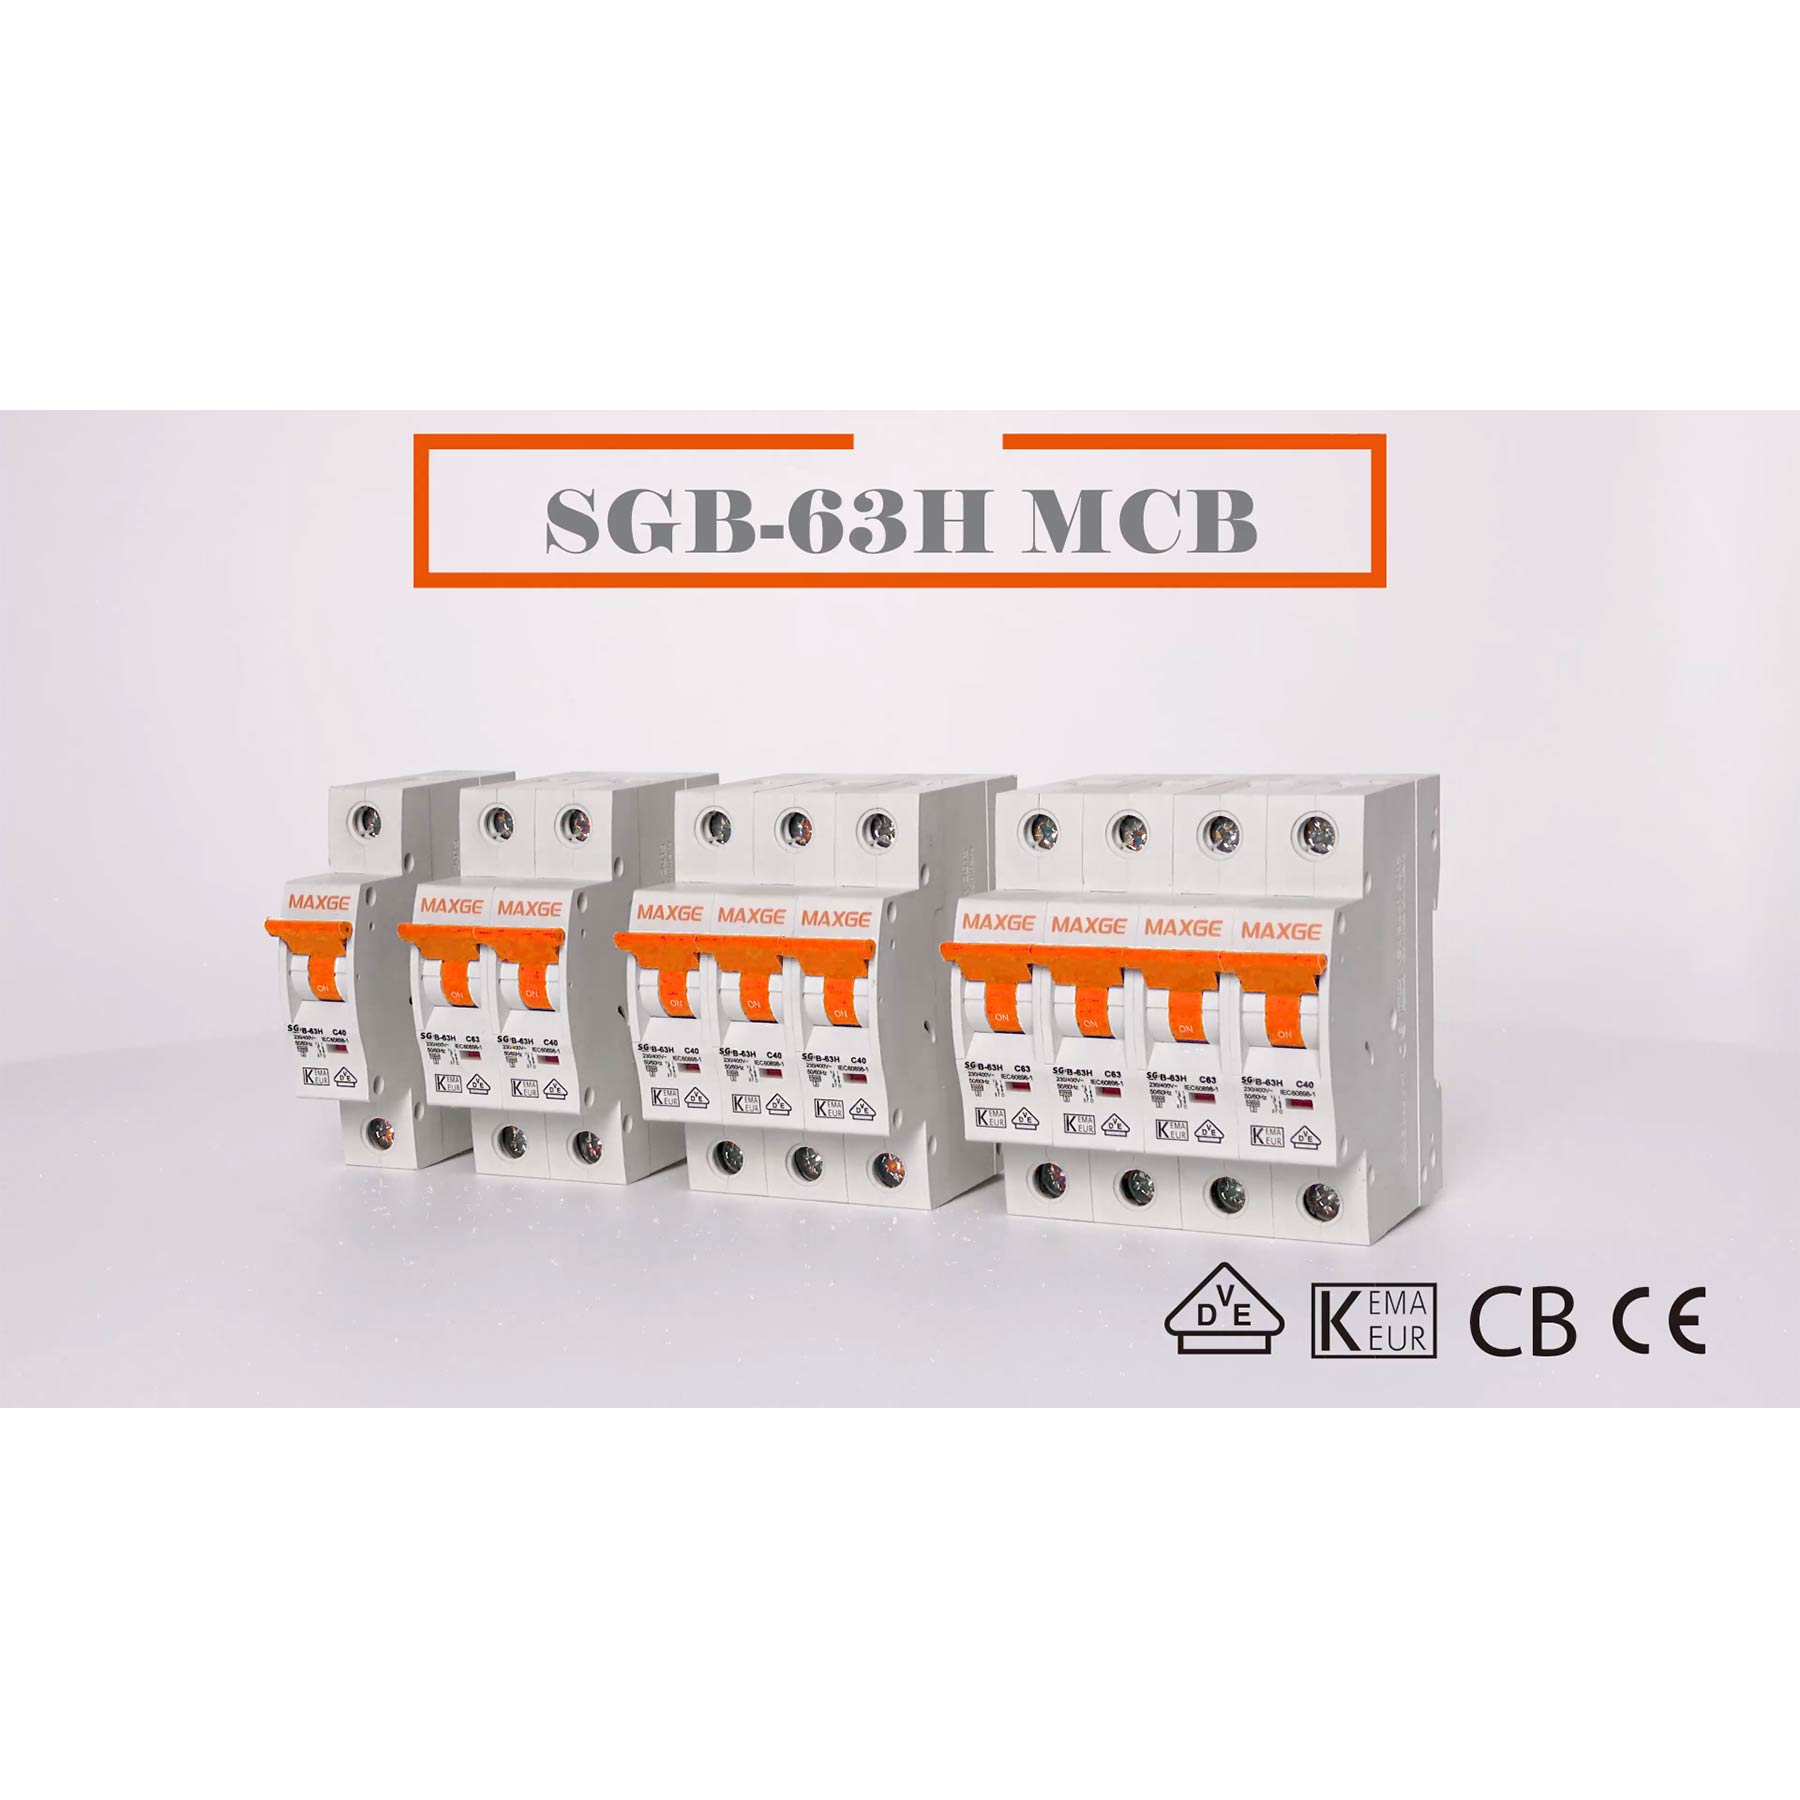 Sigma Series: SGB-63H MCB Introduction